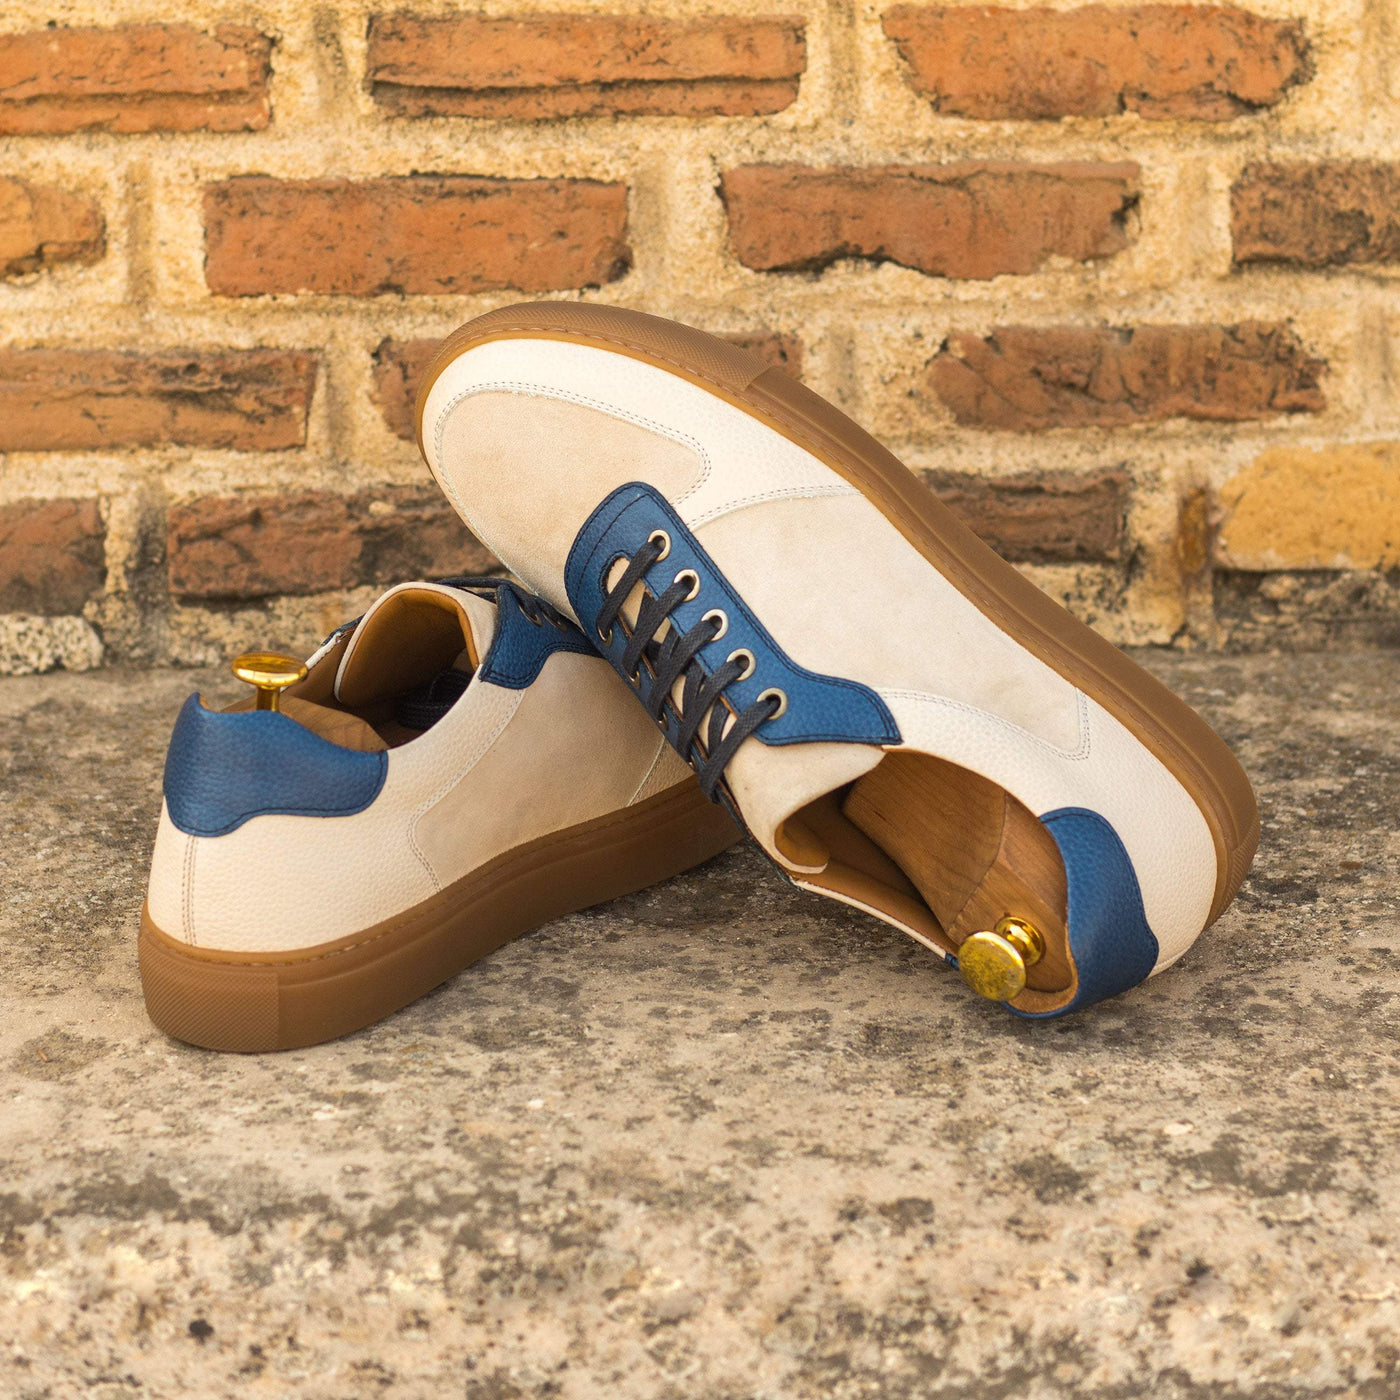 Men's Low Top Trainer Shoes Leather White 4890 1- MERRIMIUM--GID-3041-4890